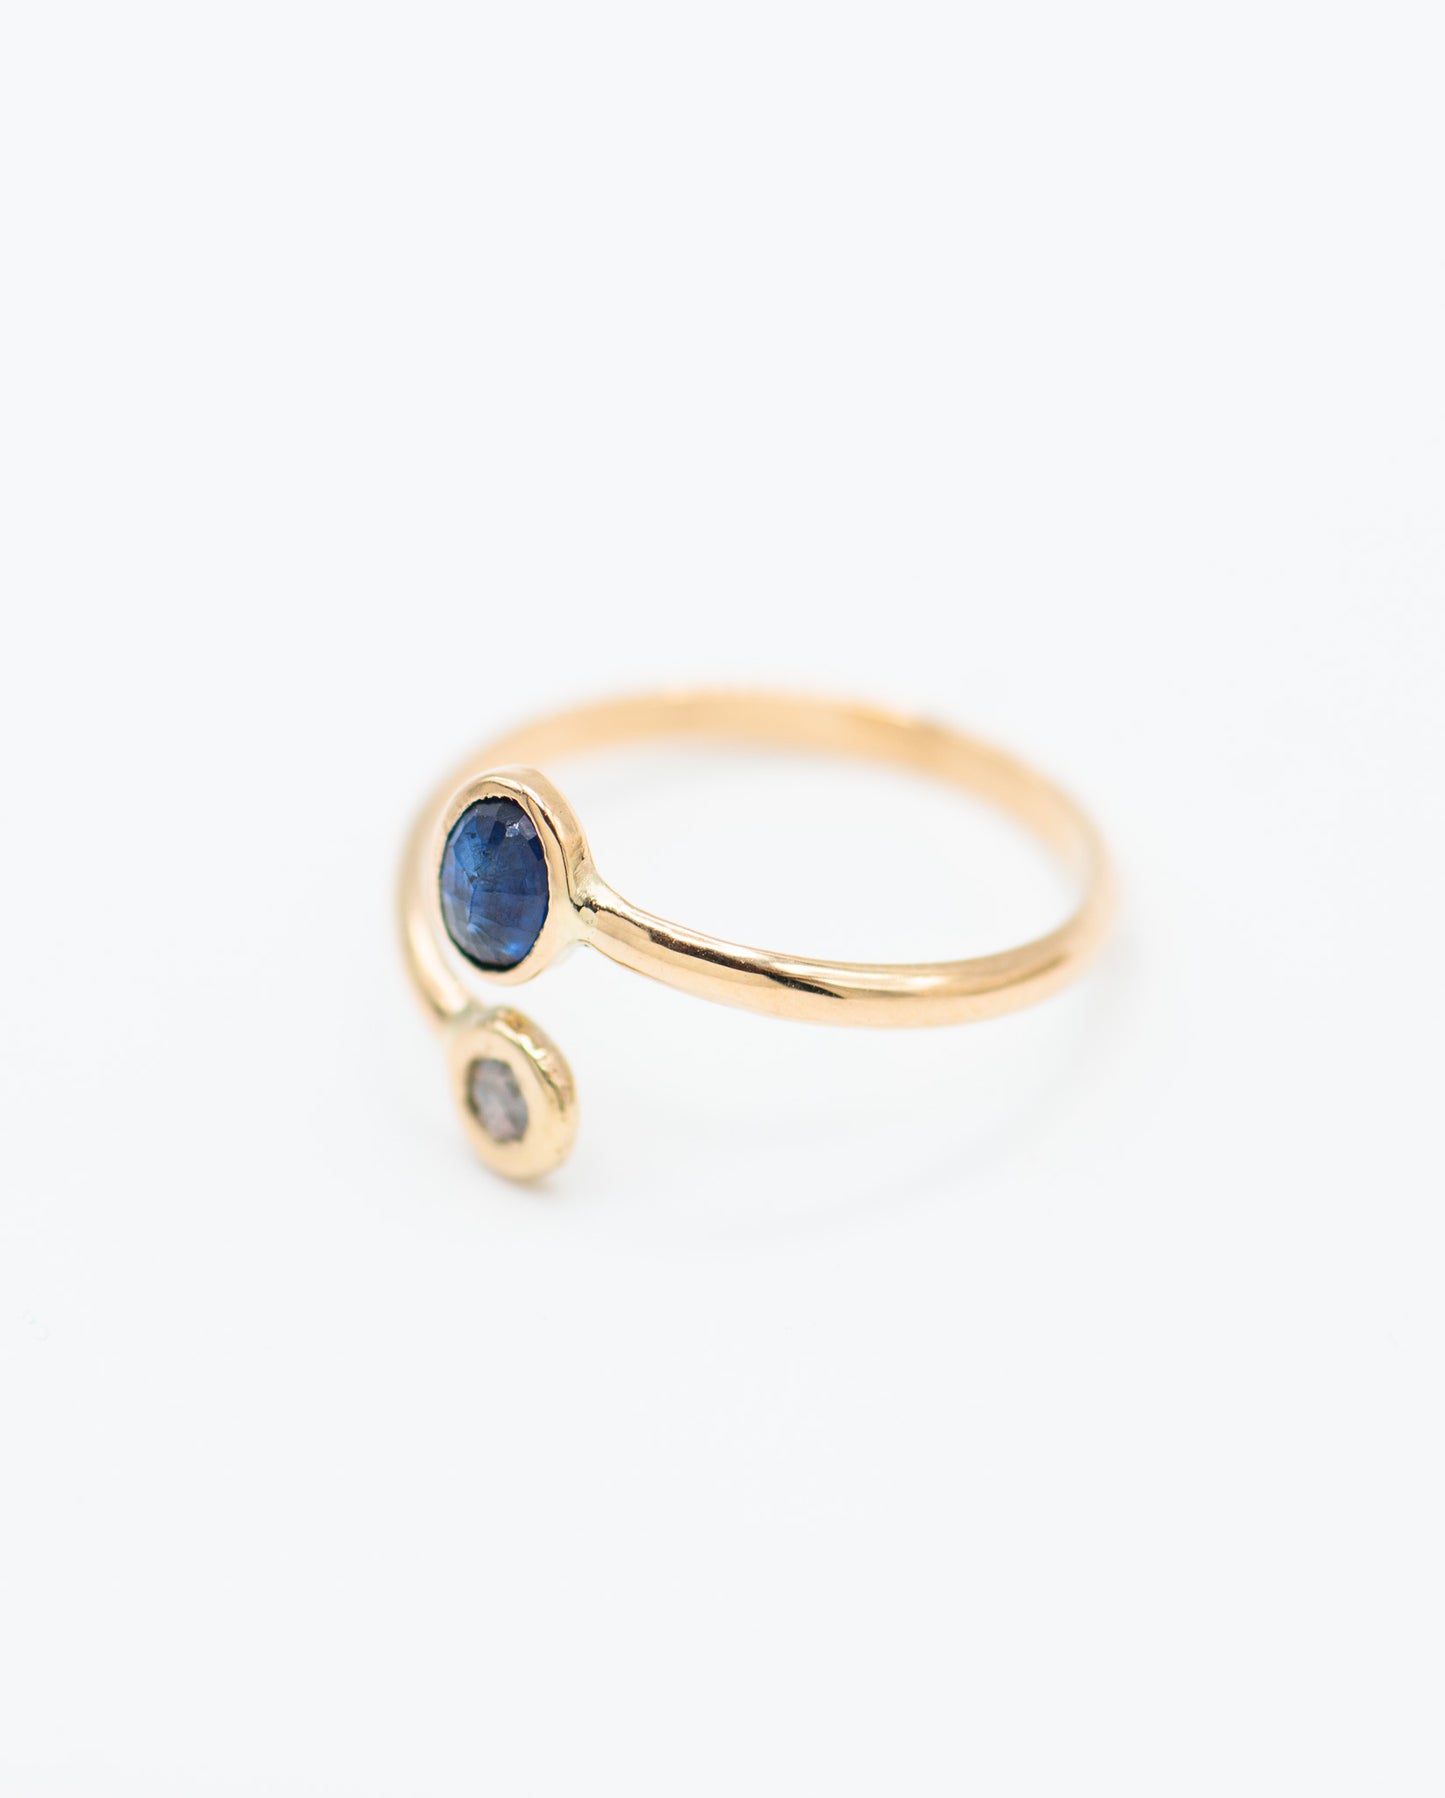 Blue Sapphire and diamond ring